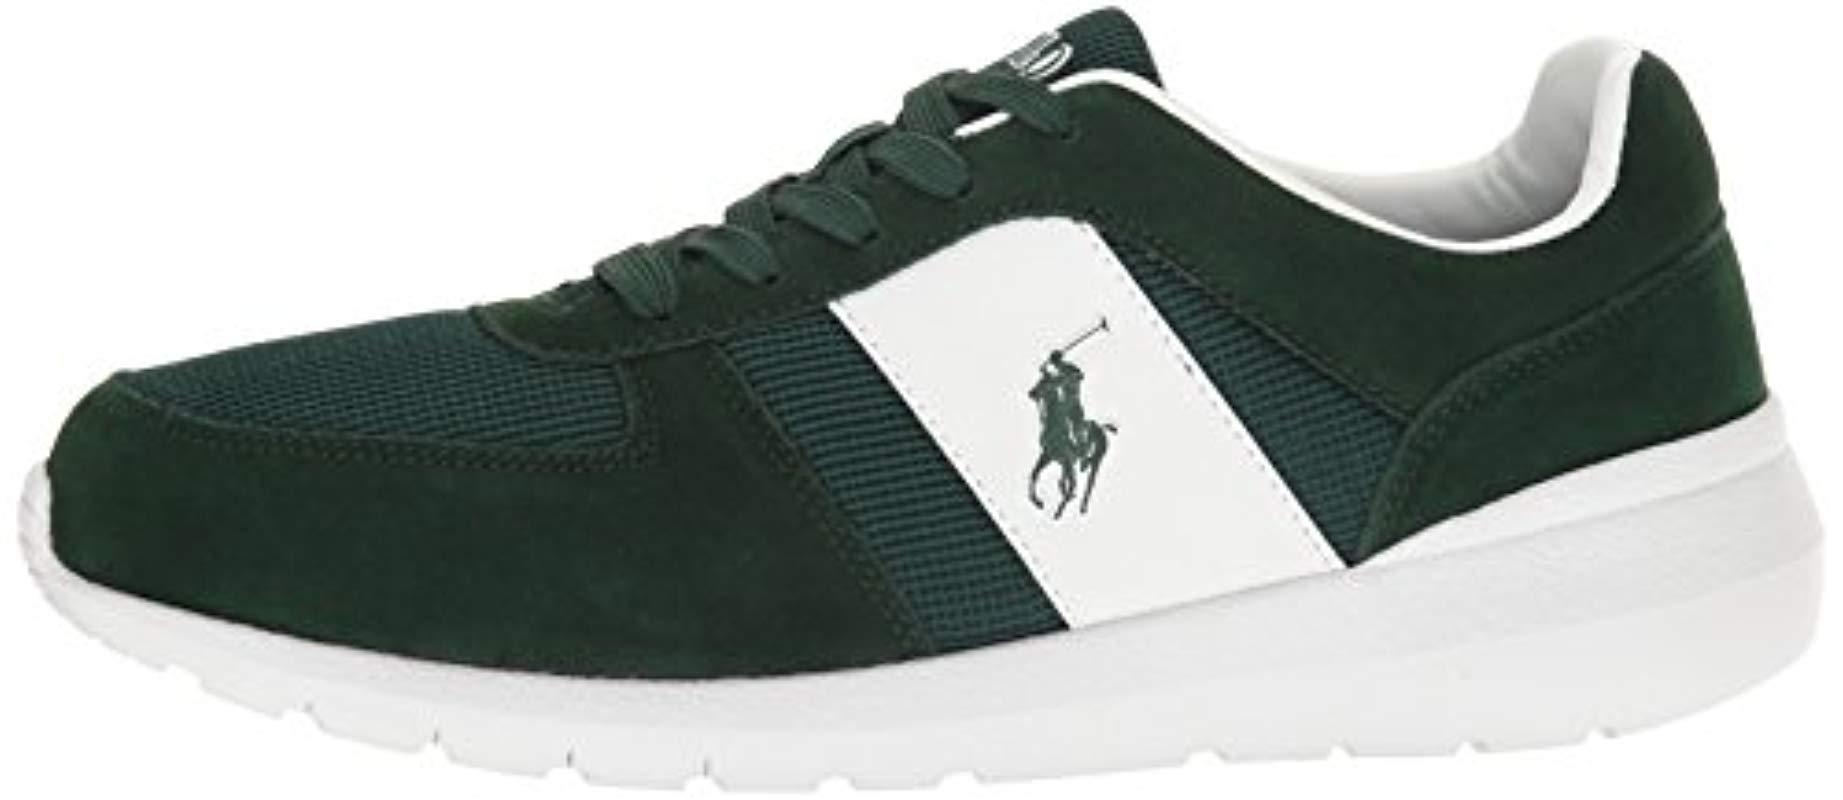 Polo Ralph Lauren Leather Cordell Sneaker in Green for Men - Lyst